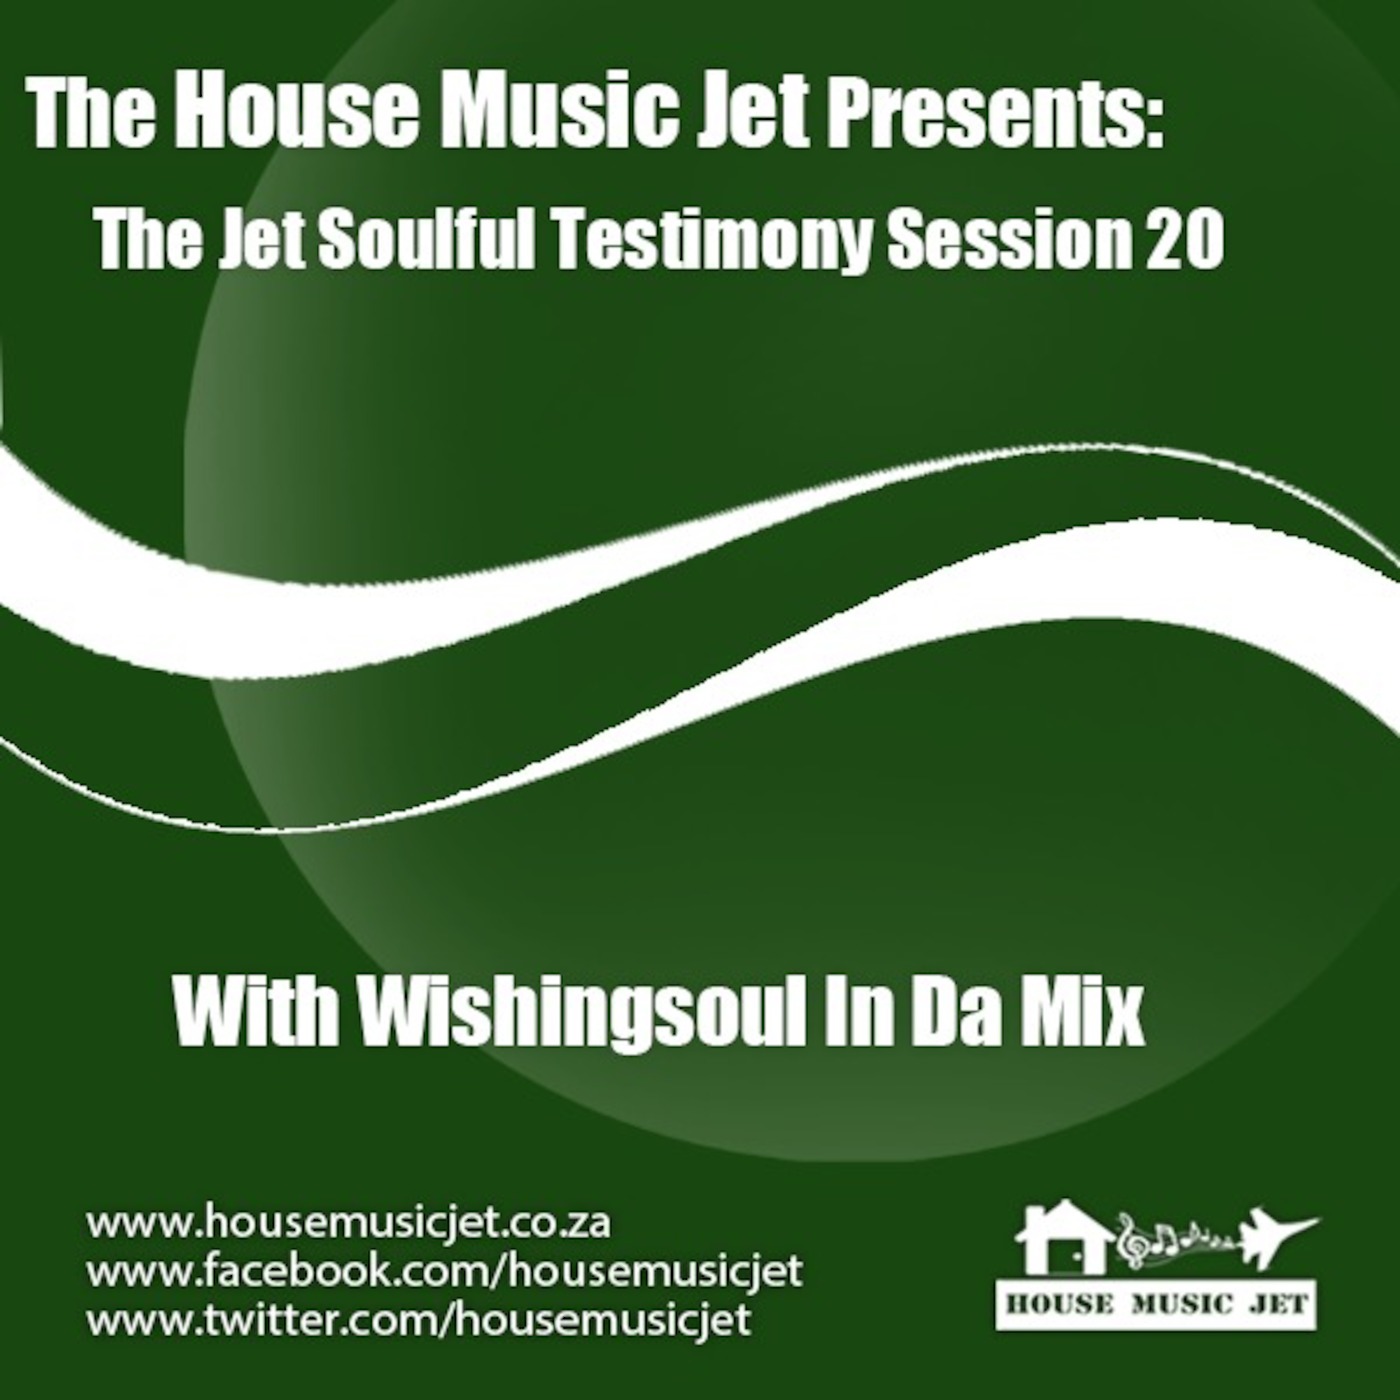 WishingSoul In Da Mix – The Jet Soulful Testimony Session 20